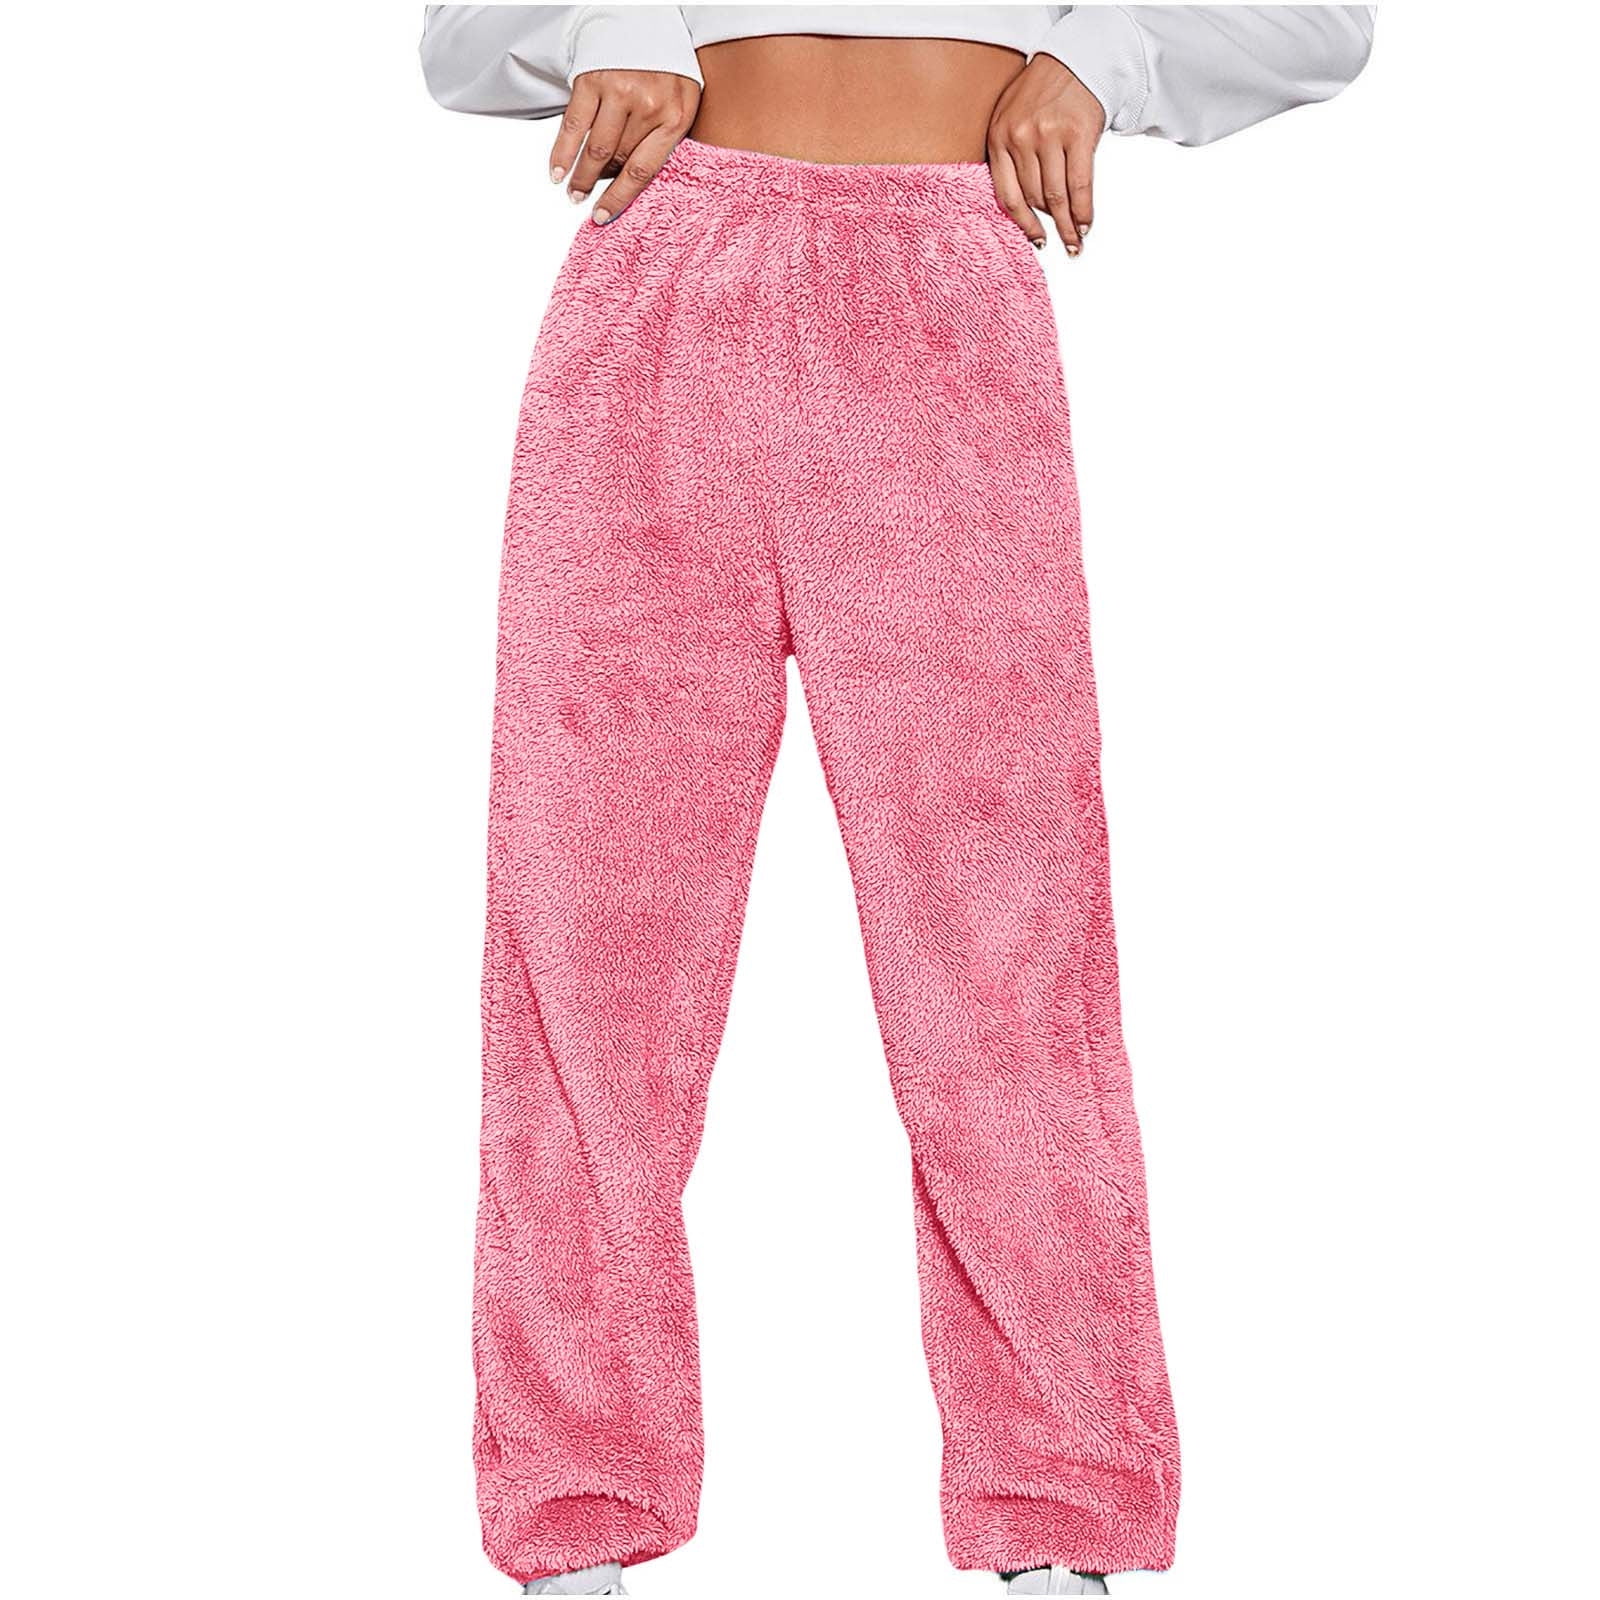 JWZUY Women Warm Fleece Drawstring Pajama Pants Jogger Plush Fuzzy